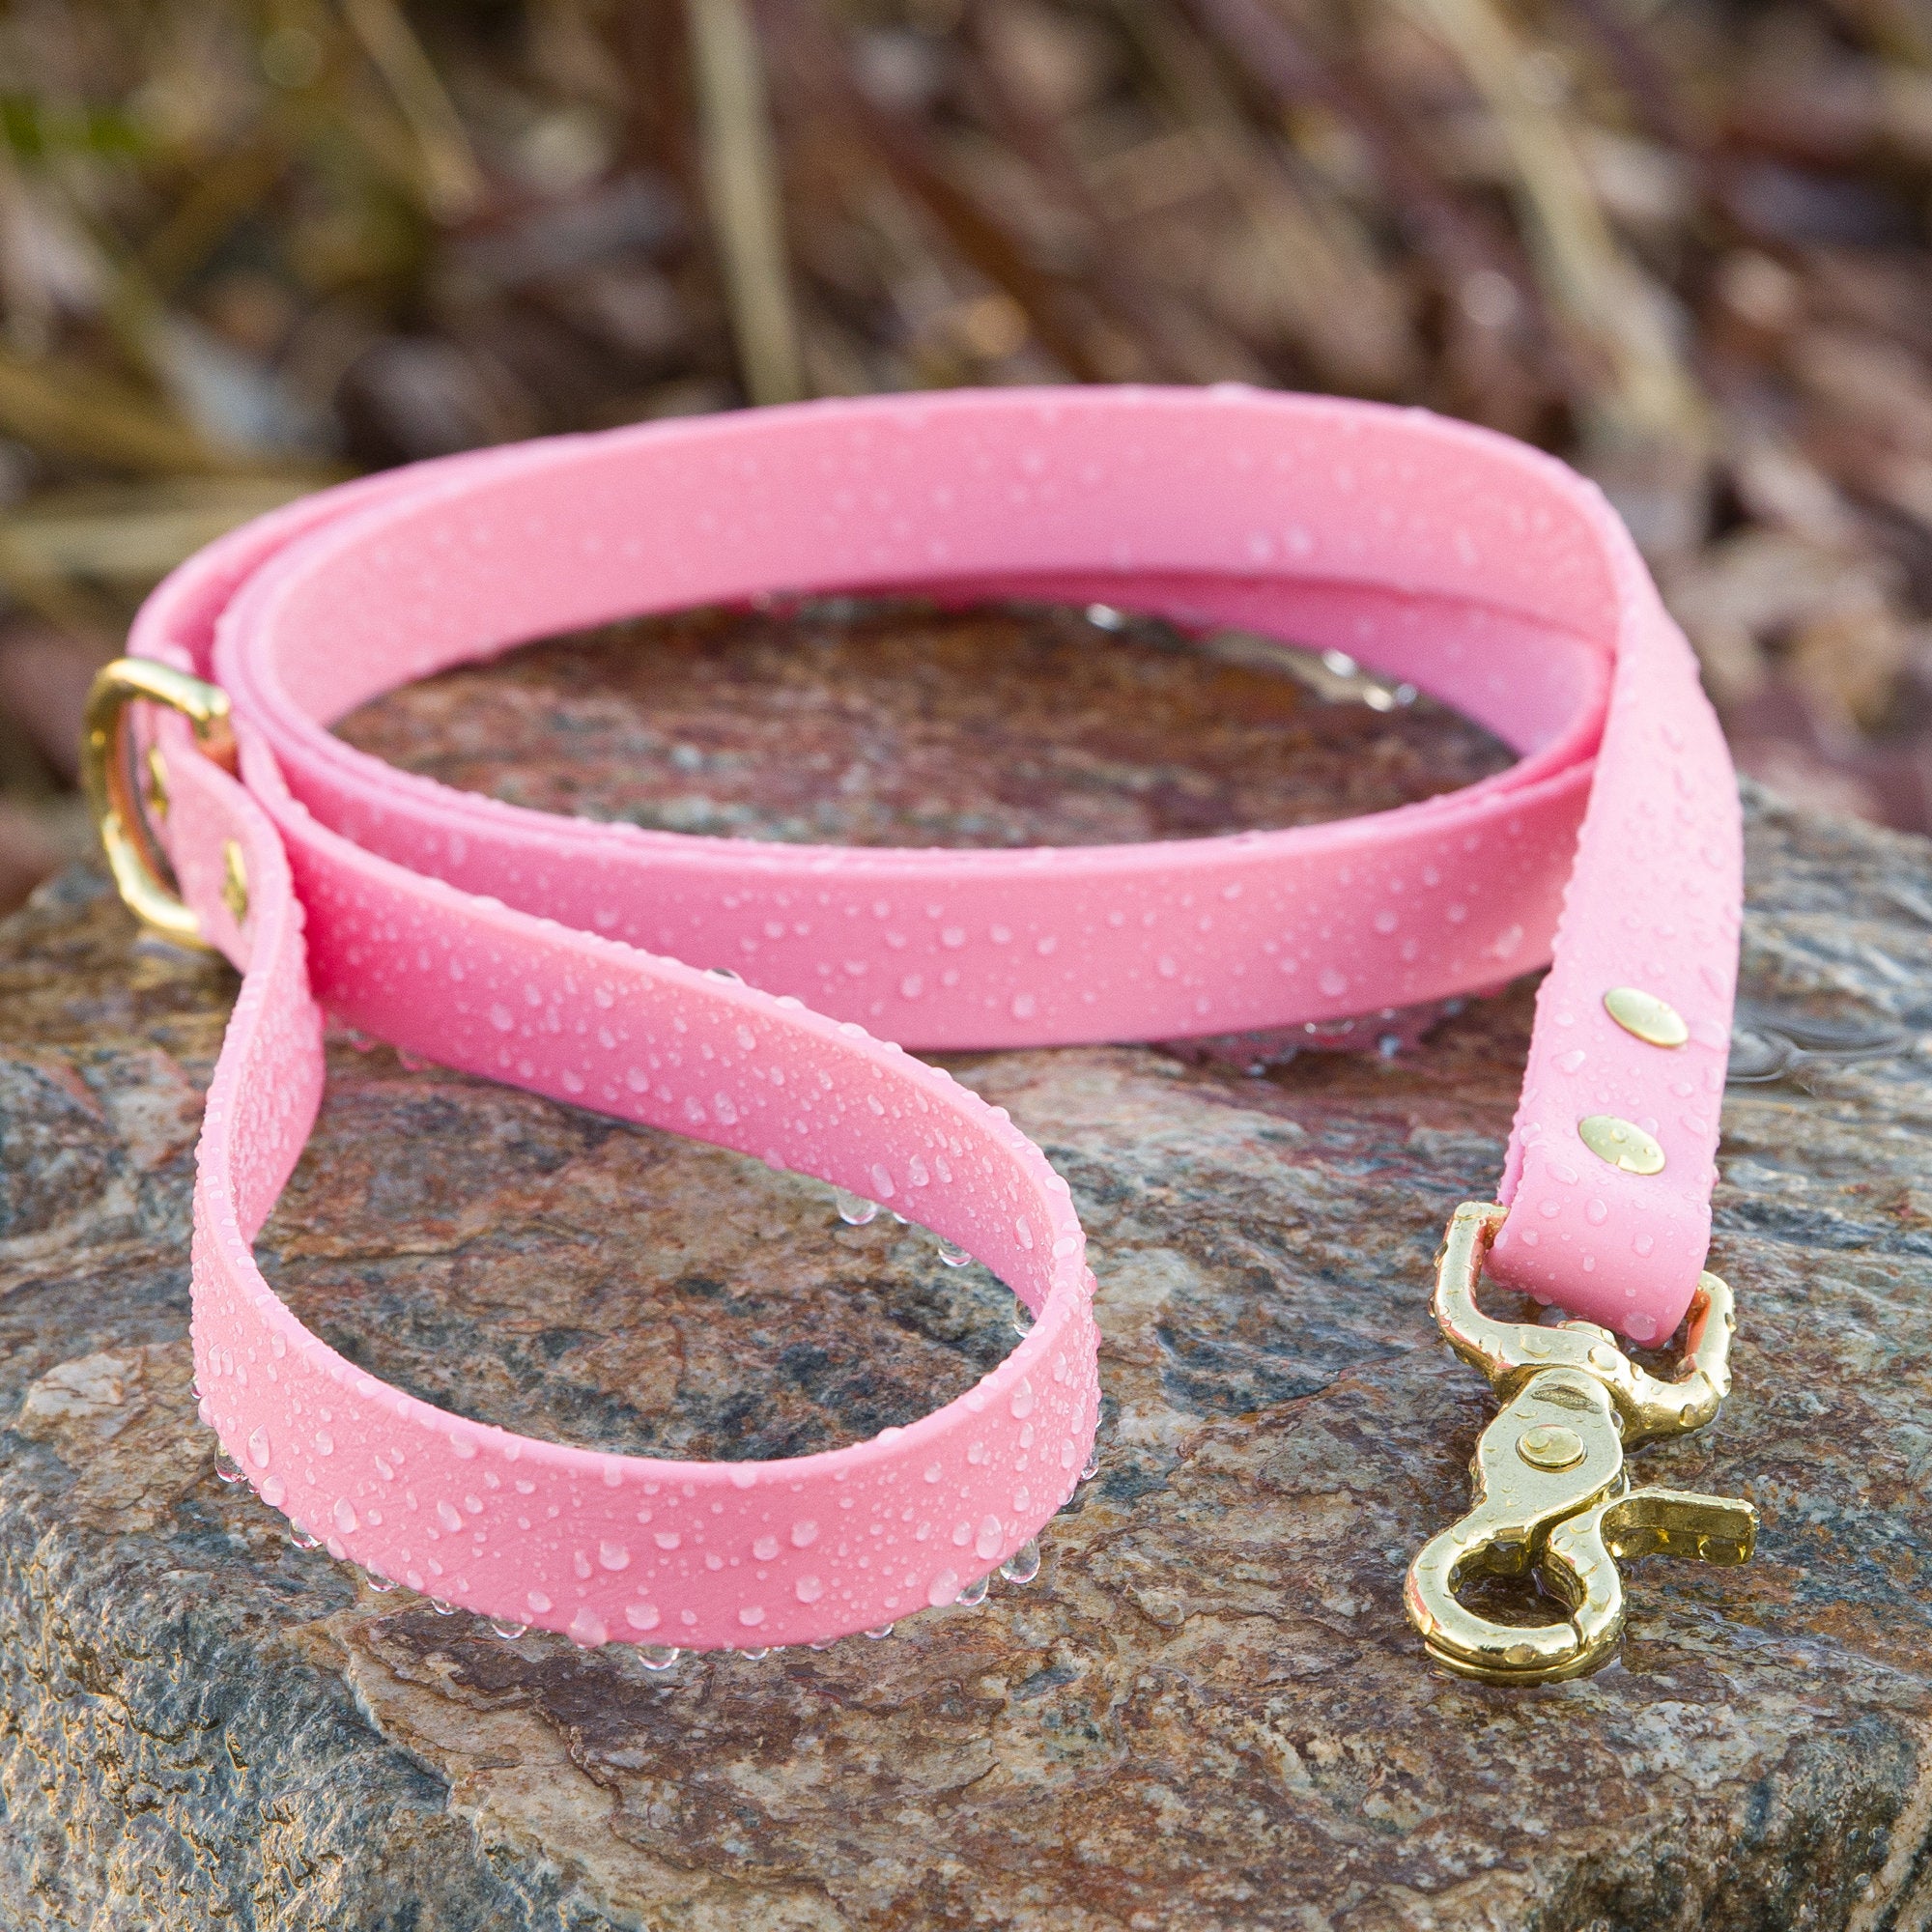 pastel pink biothane leash with brash hardware